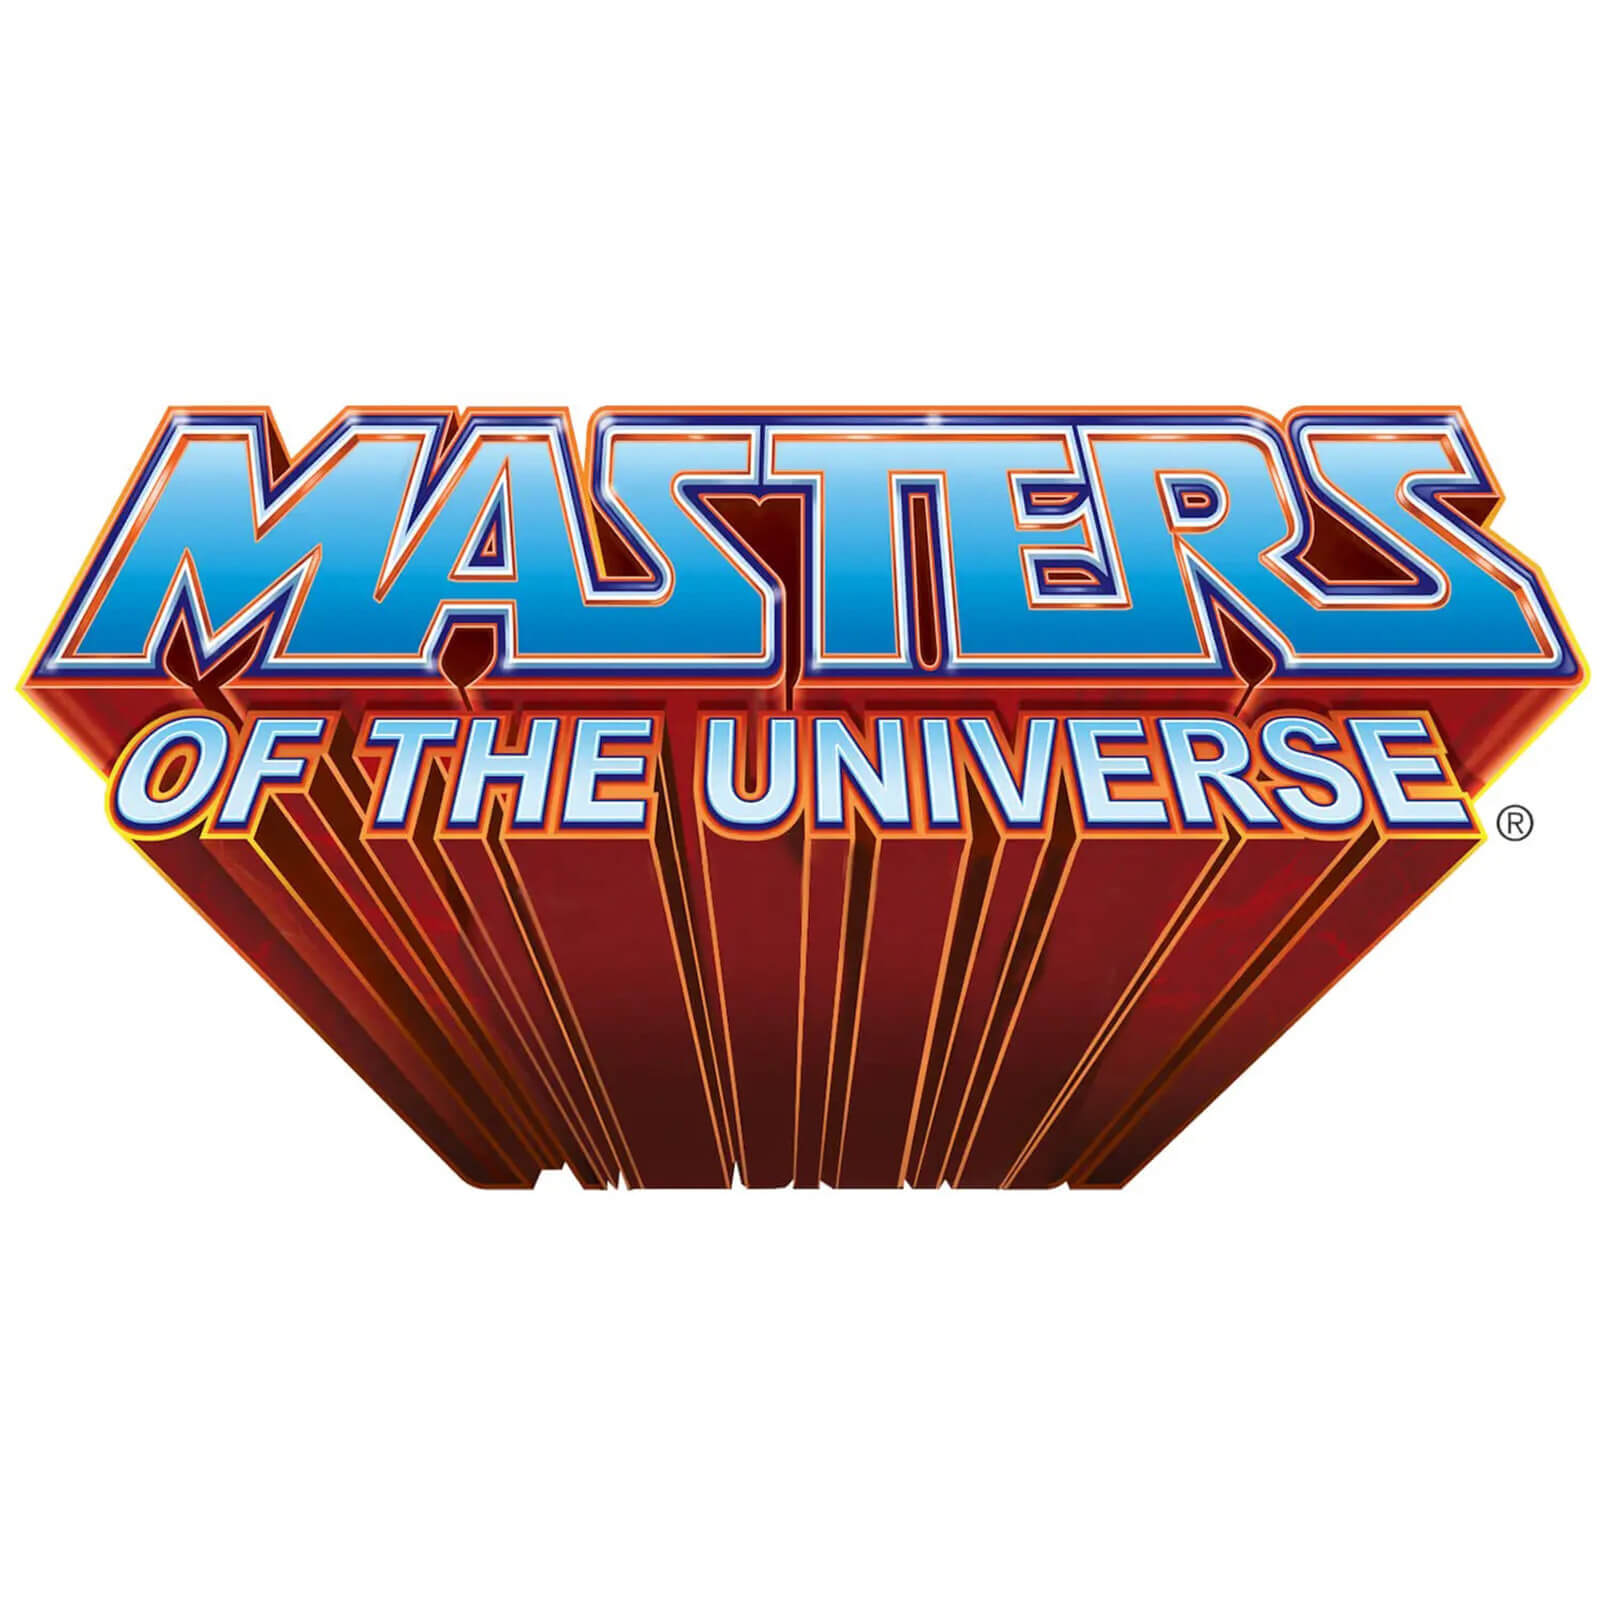 Mattel Masters of the Universe Origins Deluxe Action Figure - Terror Claw Skeletor